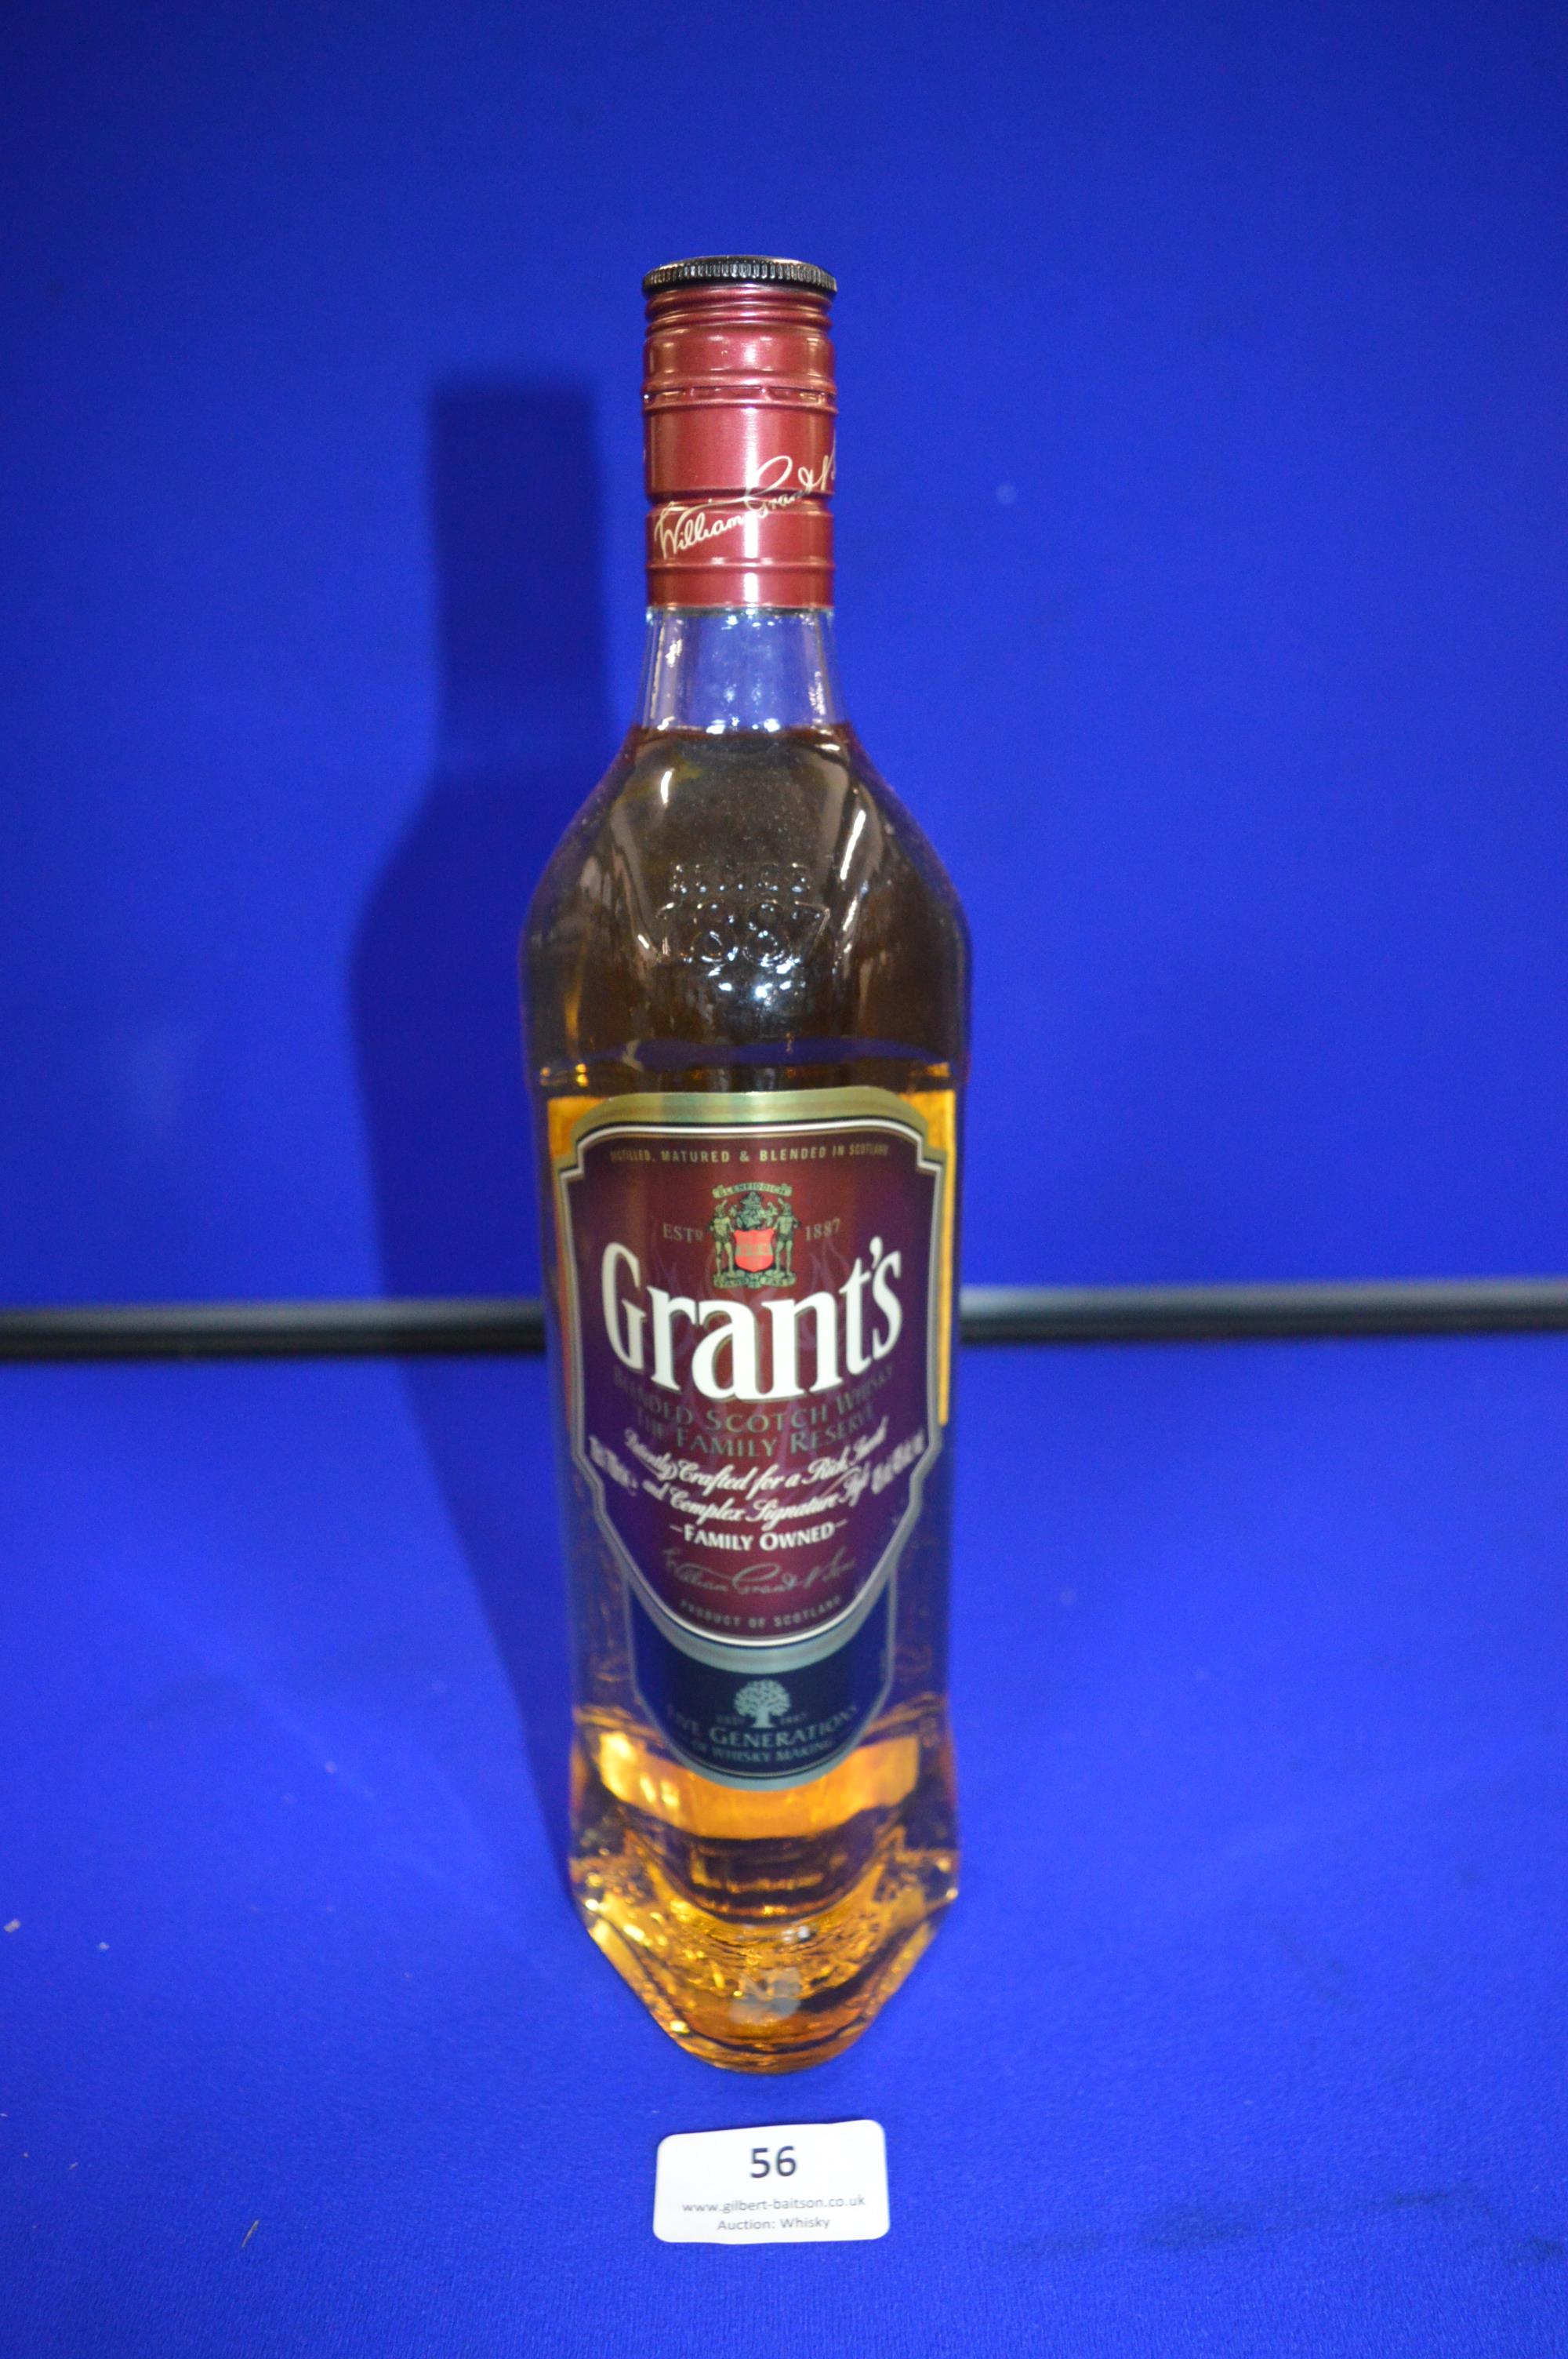 Grant's Blended Scotch Whisky